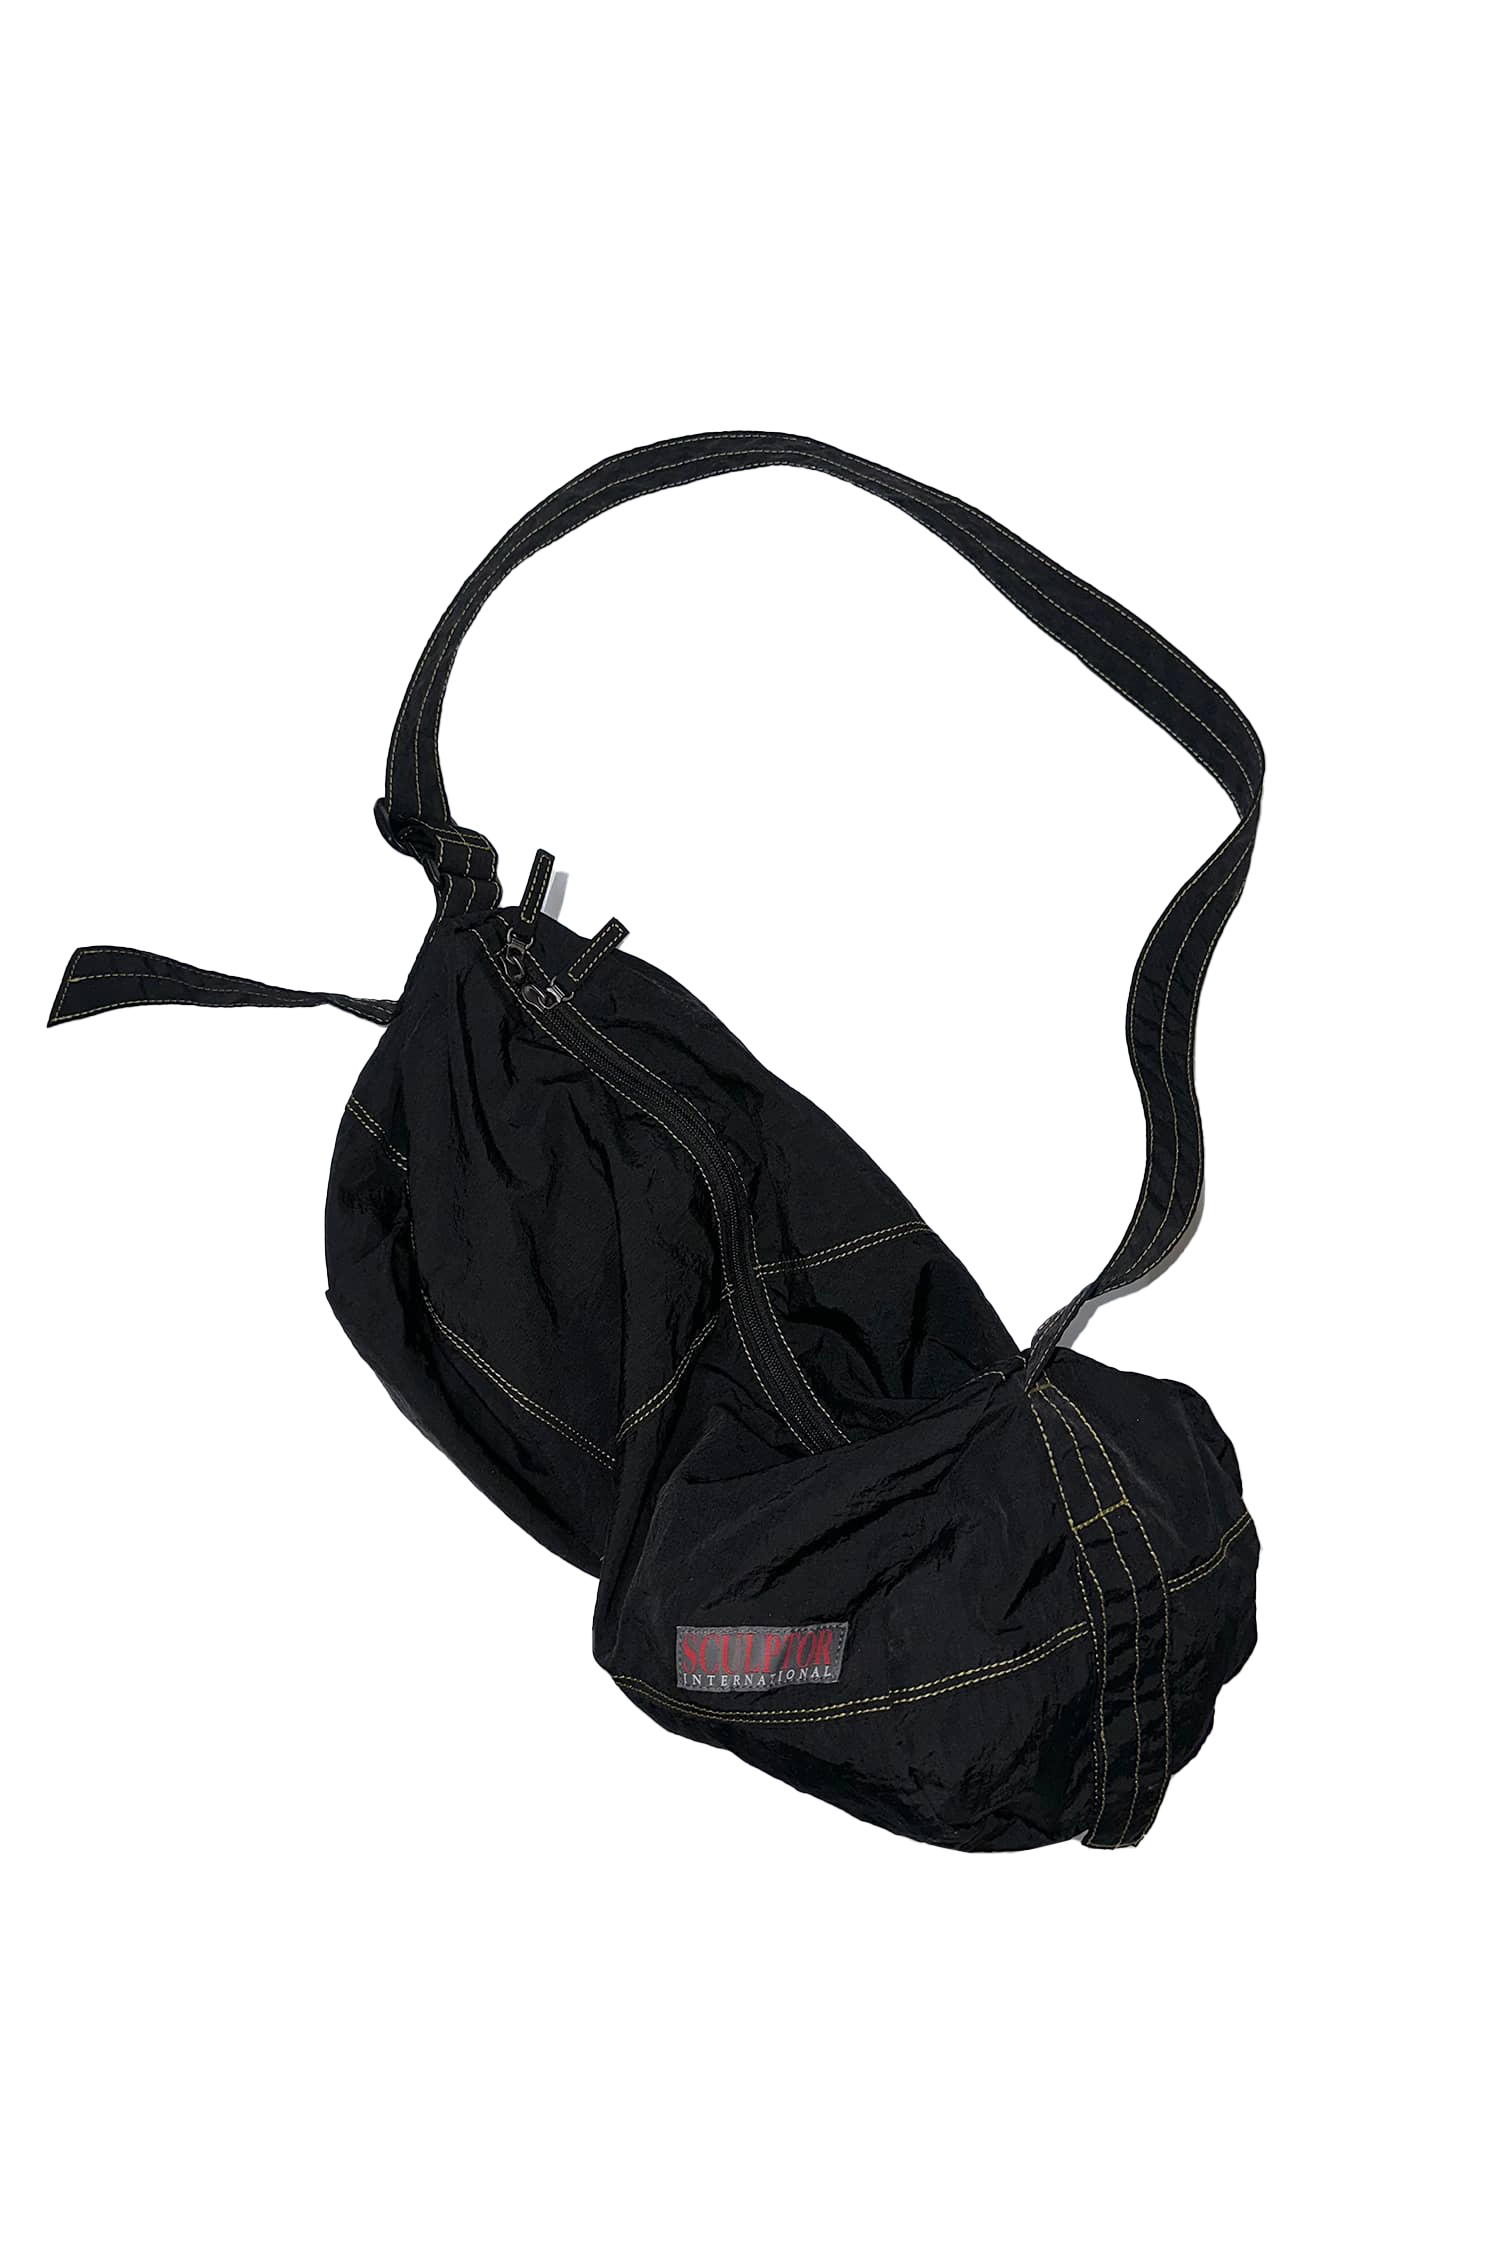 Contrast Stitch Nylon Duffle Bag Black